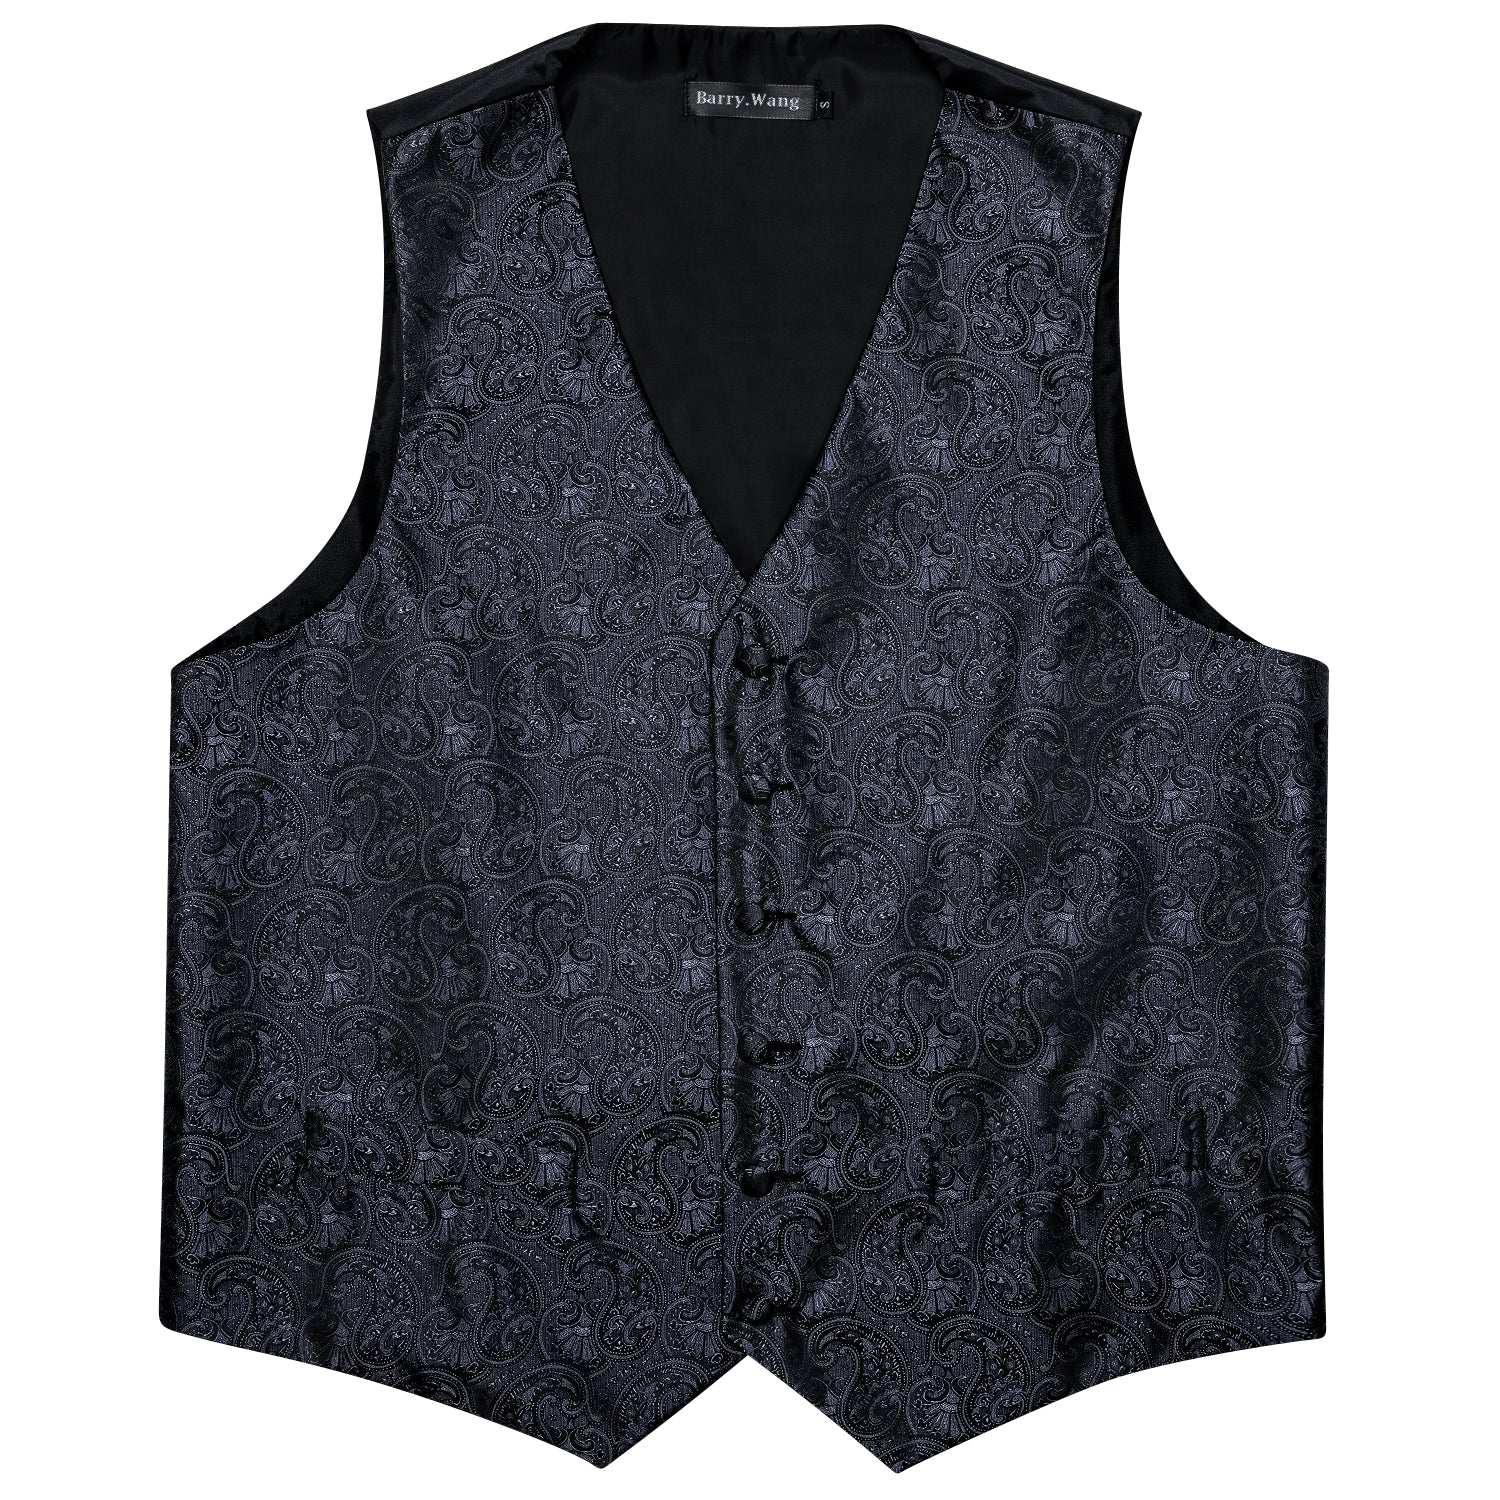 New Men's Black Paisley Silk Vest Necktie Pocket square Cufflinks